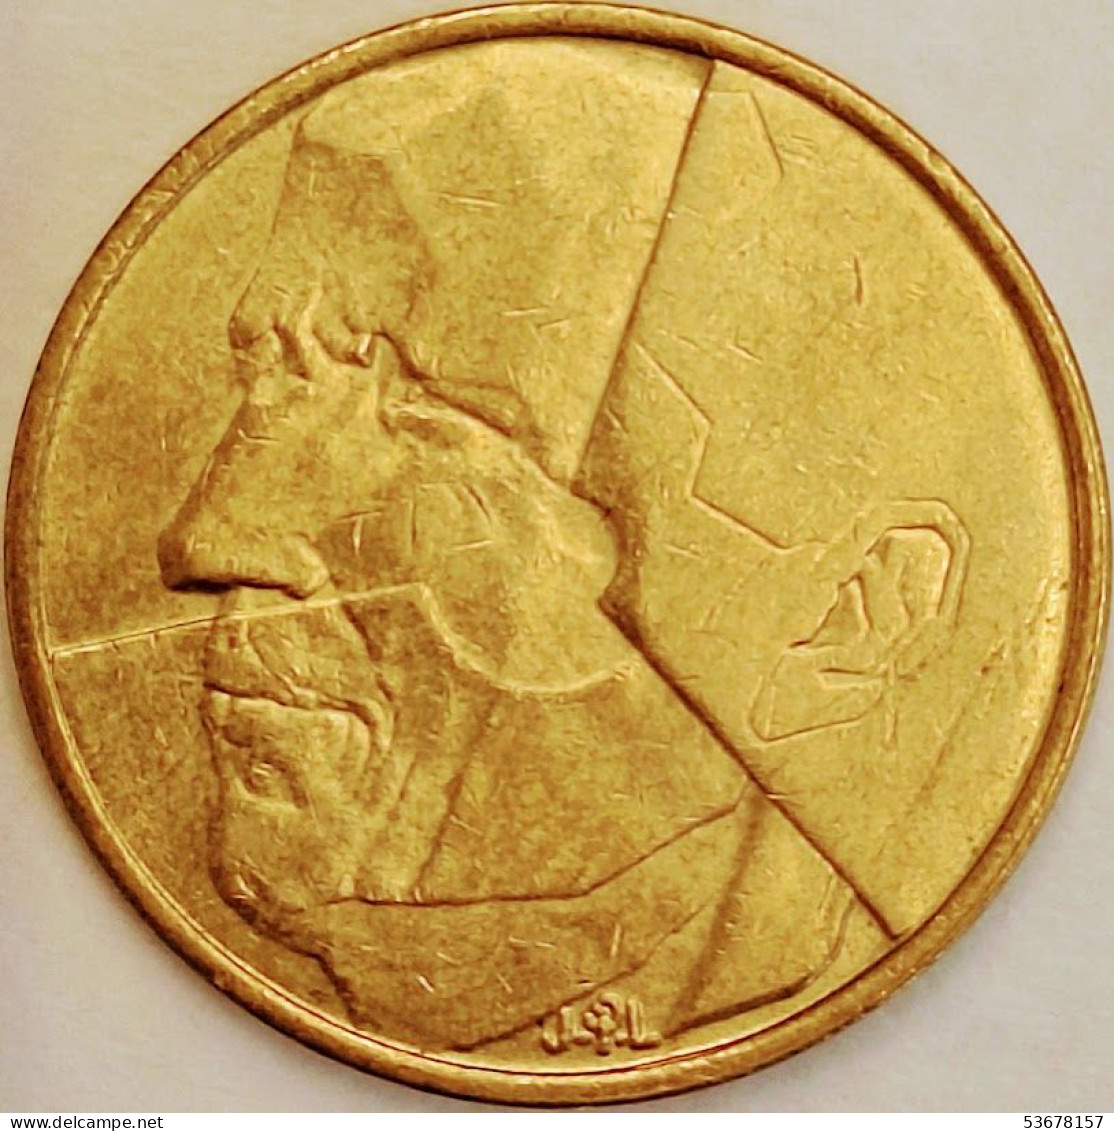 Belgium - 5 Francs 1986, KM# 164 (#3194) - 5 Frank